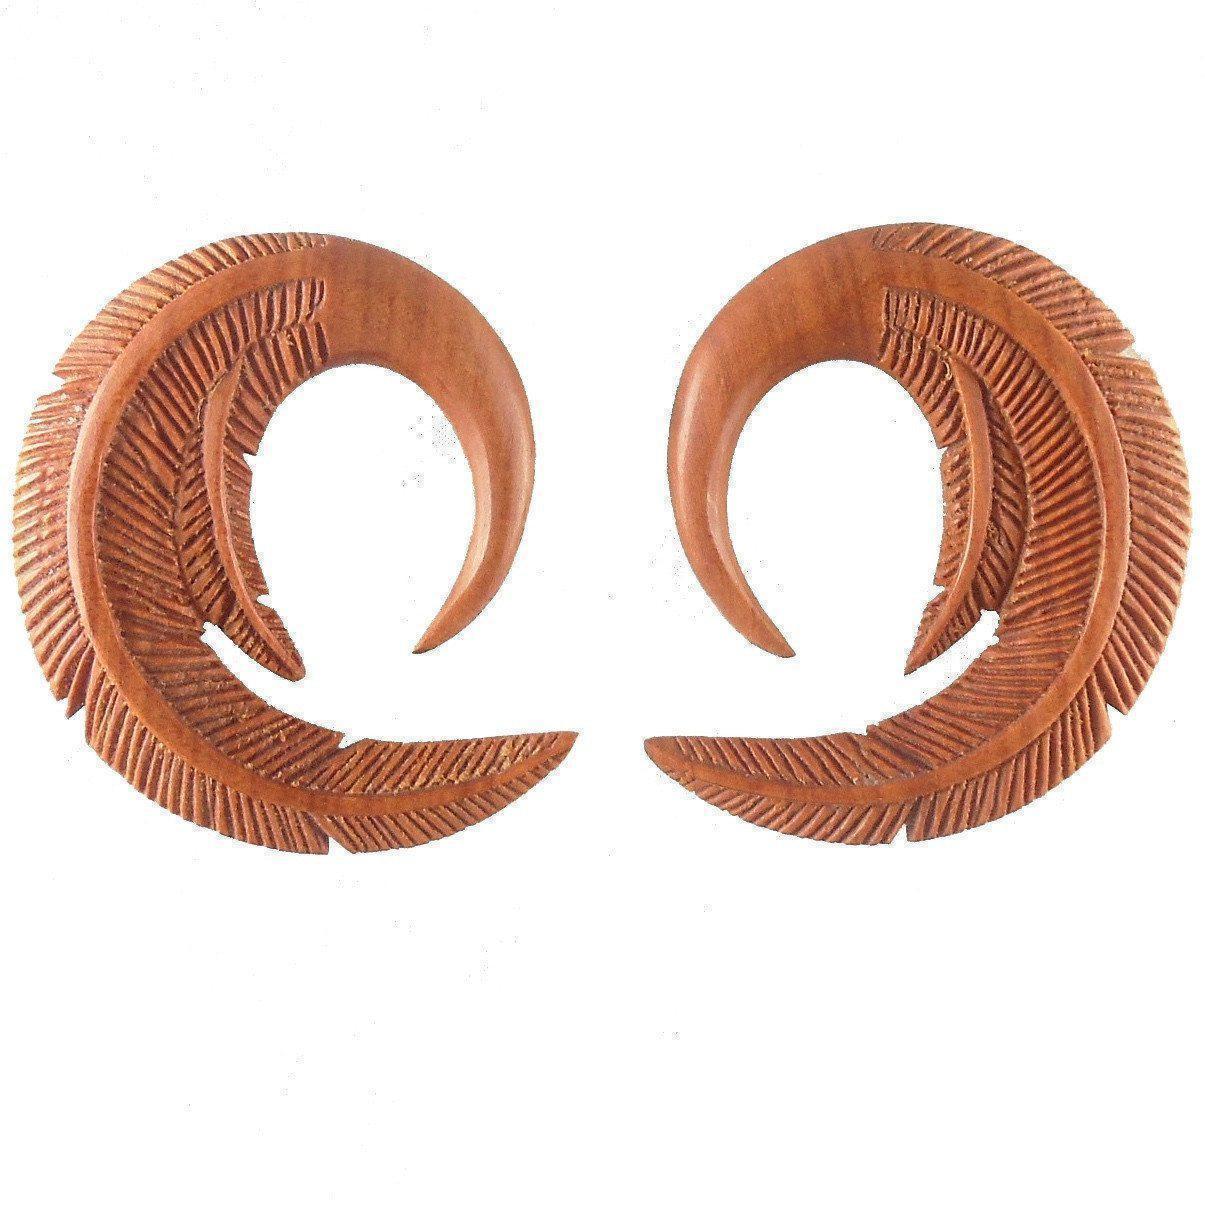 Gauge Earrings :|: Feather, Fruit Wood. 0 gauge earrings.